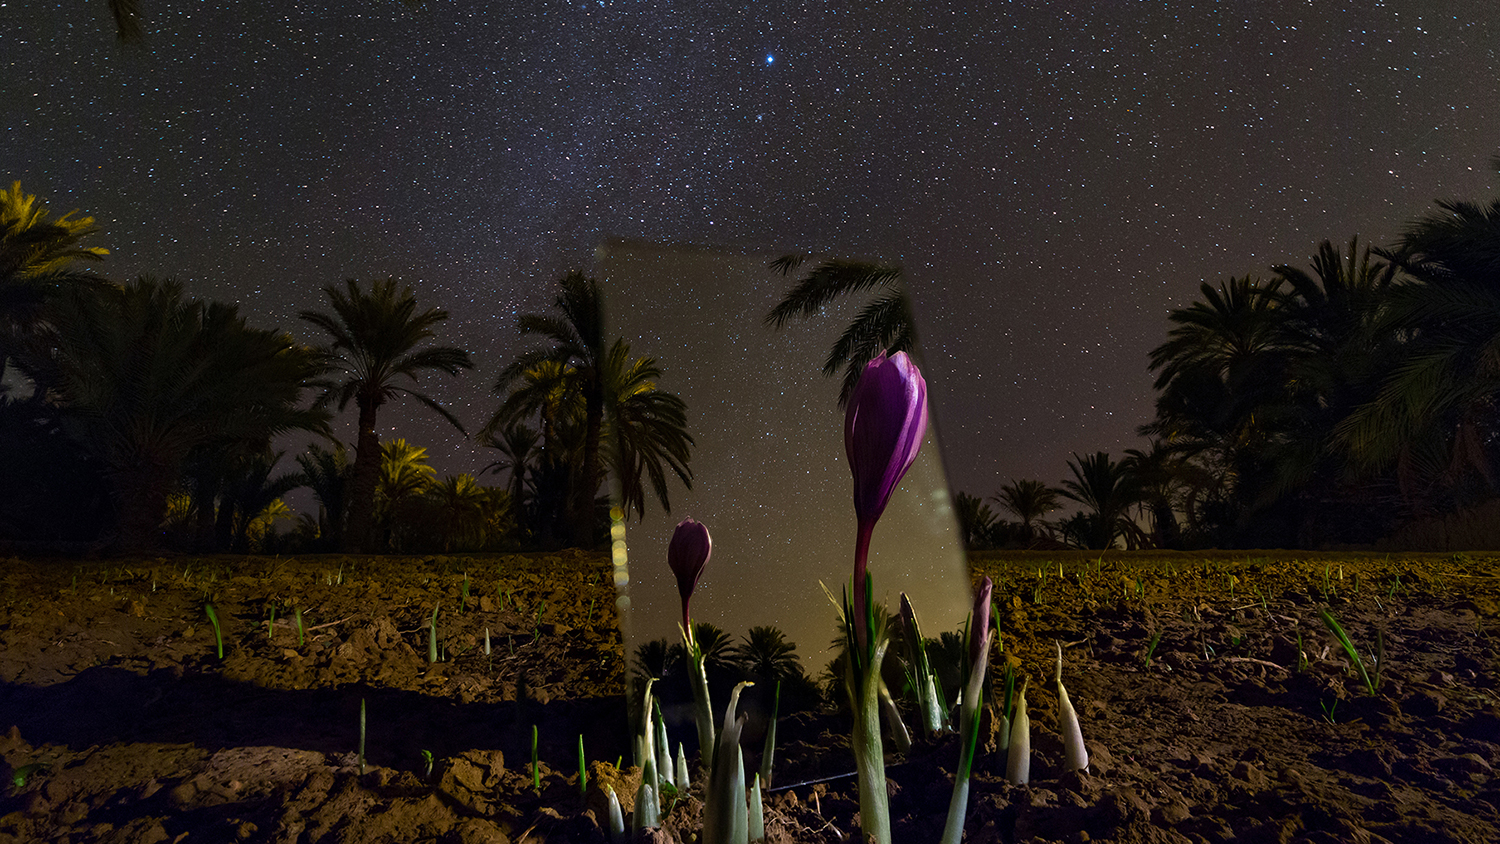 Capture the Iranian Night Sky upon Saffron Fields